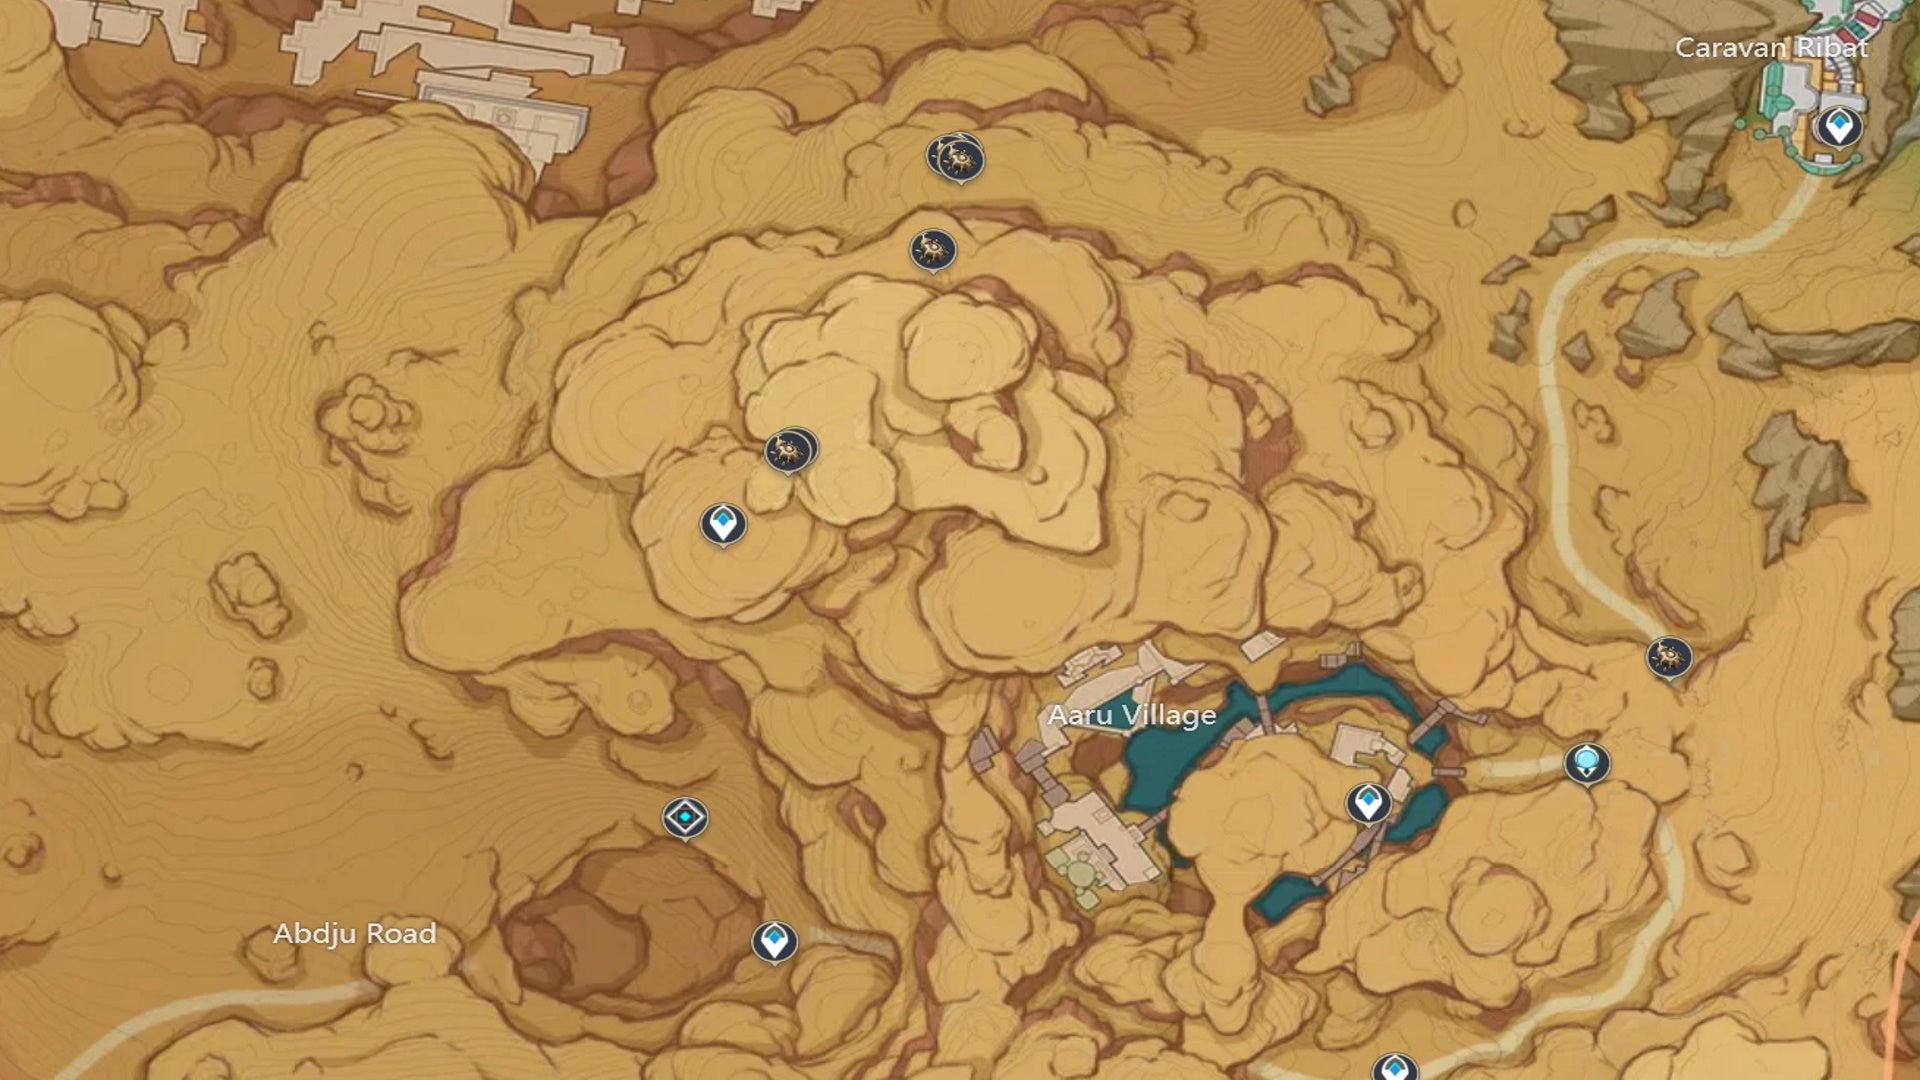 Genshin Impact Scarab locations: A map image showing Aaru Village scarab locations